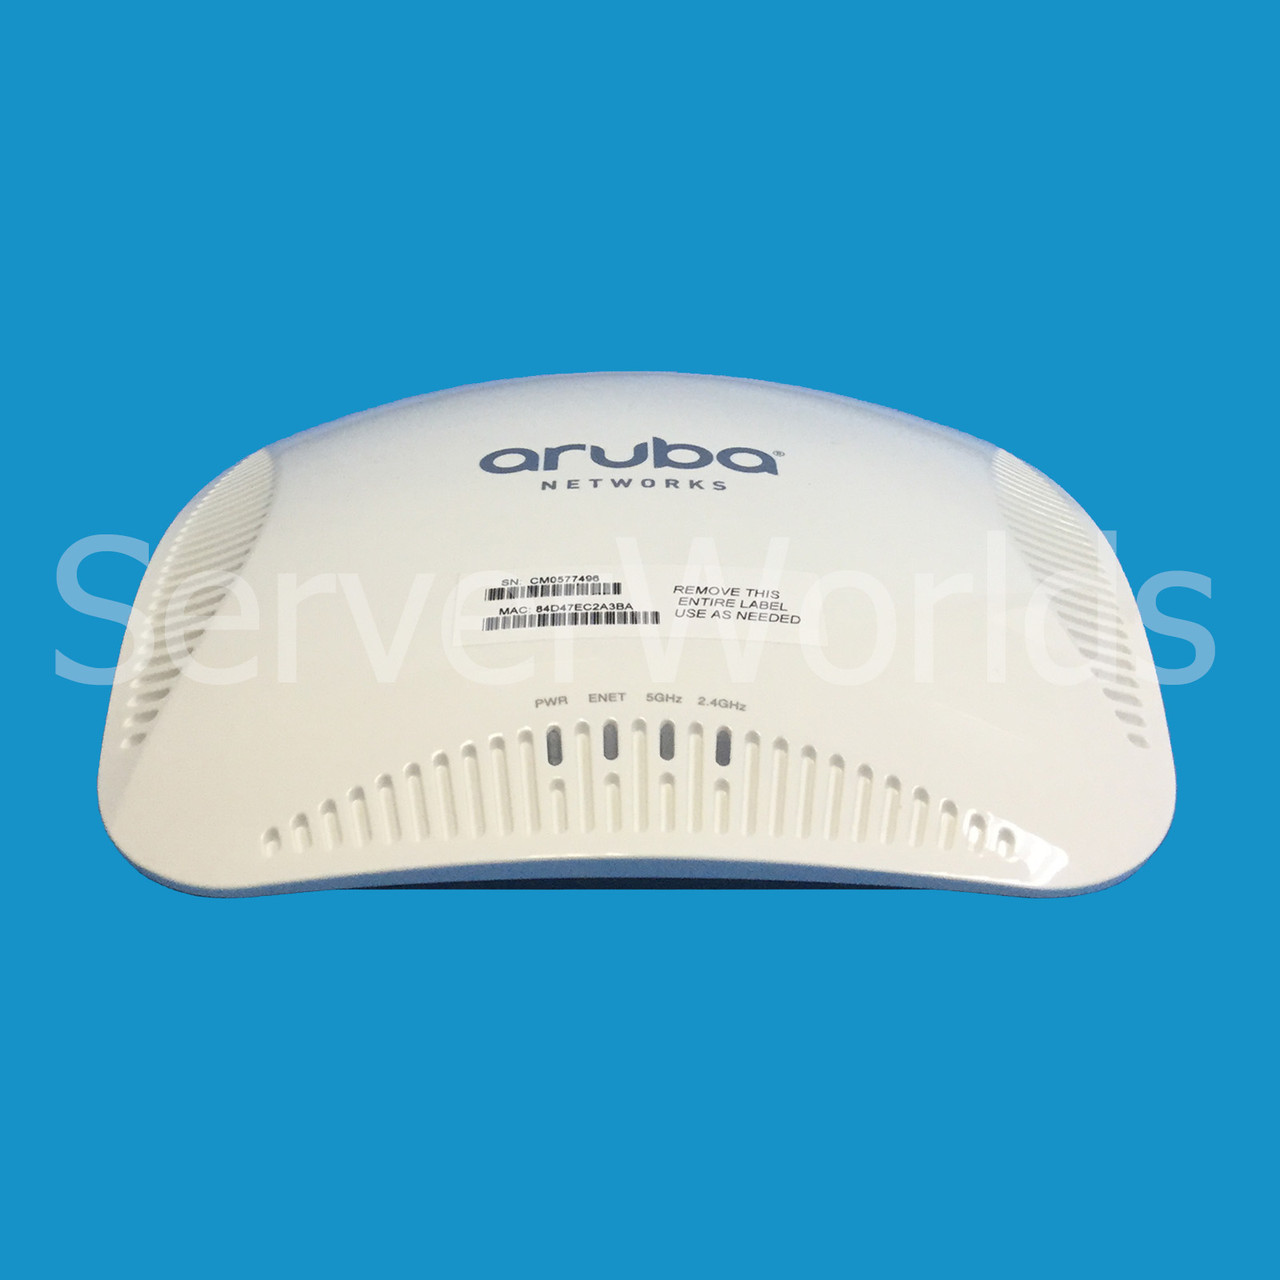 HPe JW164A Aruba AP-205 AP Wireless Access Point JW164-61001 AP-205